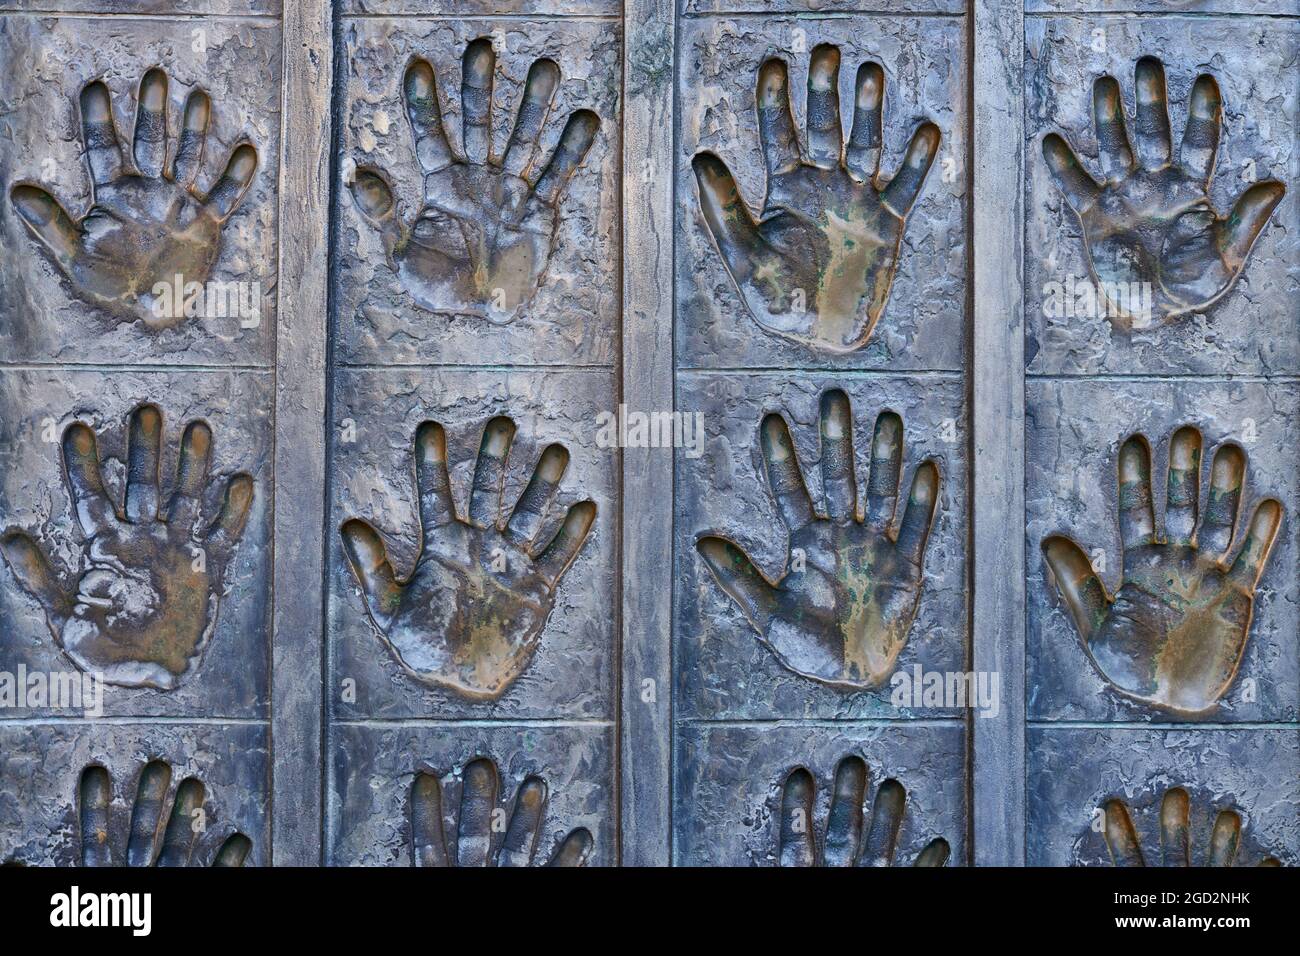 Metall offene Hände in Skulptur auf der Plaza de la Catedral de Leon. Spanien Stockfoto